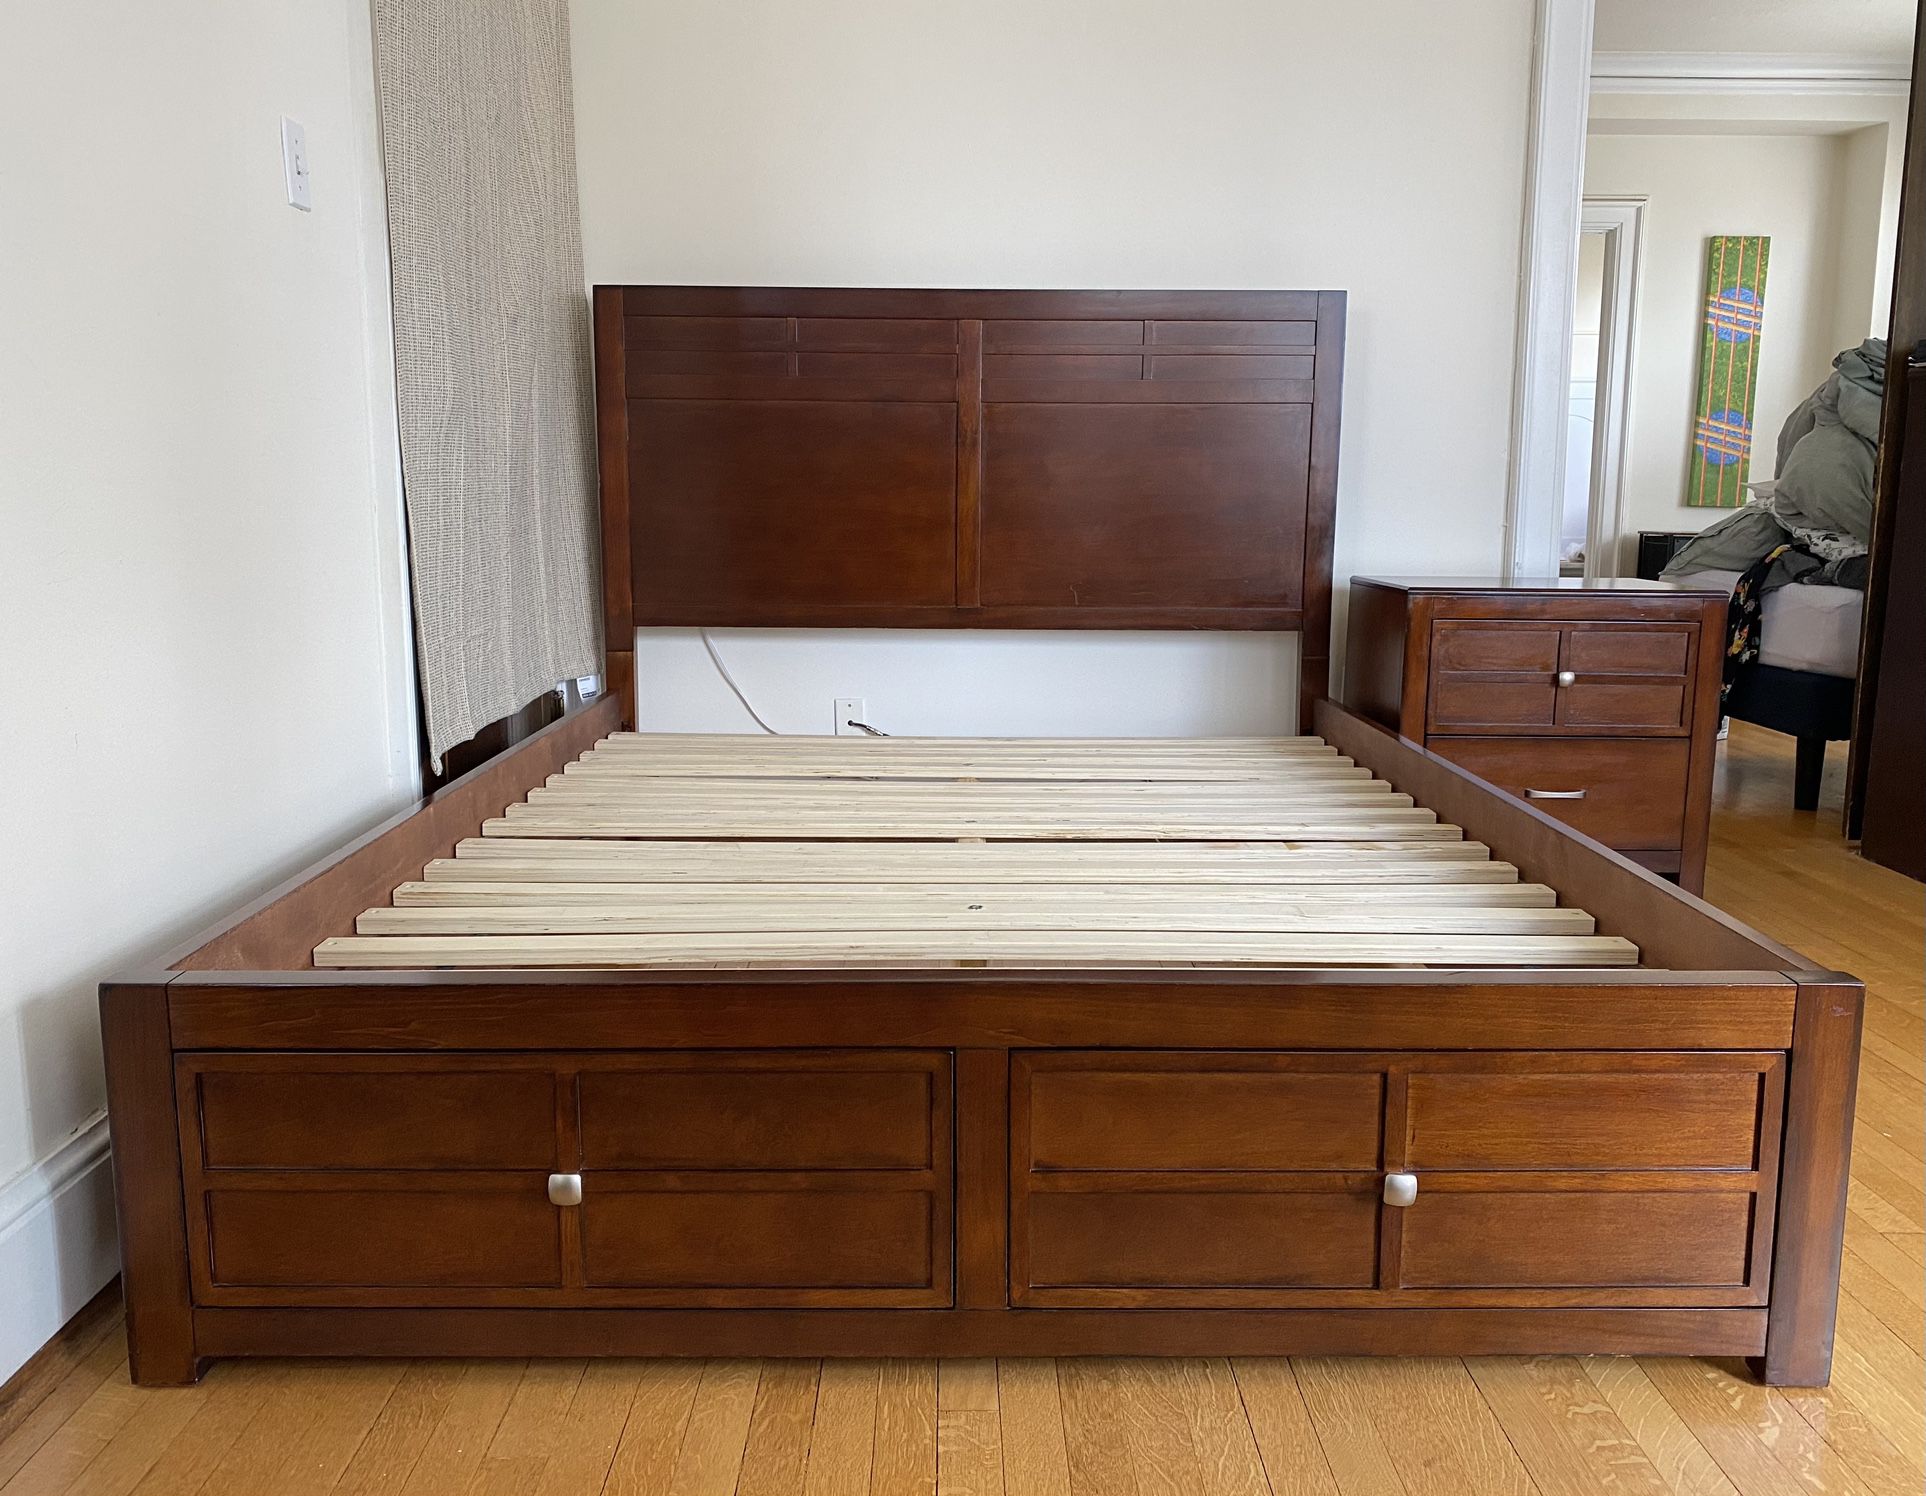 Hardwood queen bed frame and nightstand